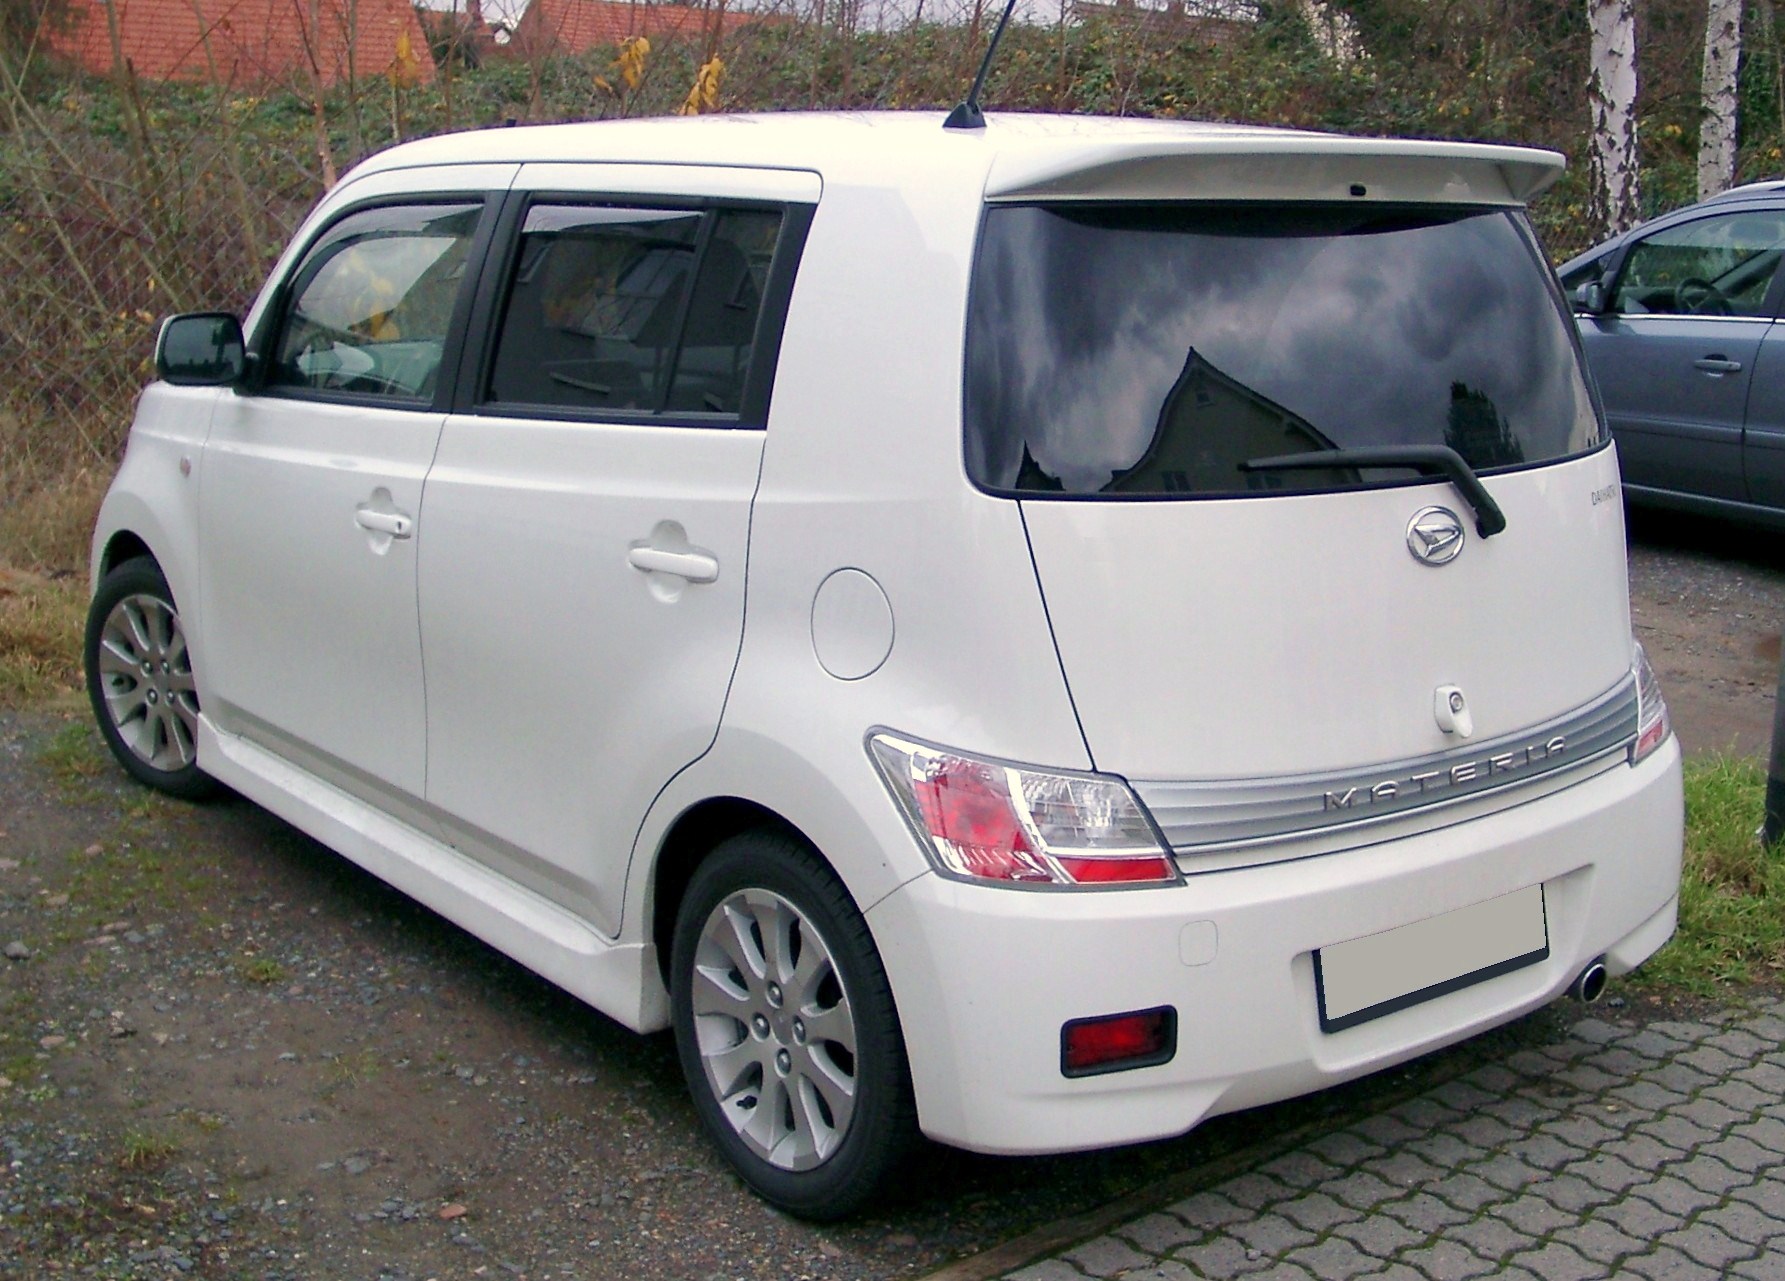 File:Daihatsu Materia rear 20071211.jpg - Wikimedia Commons